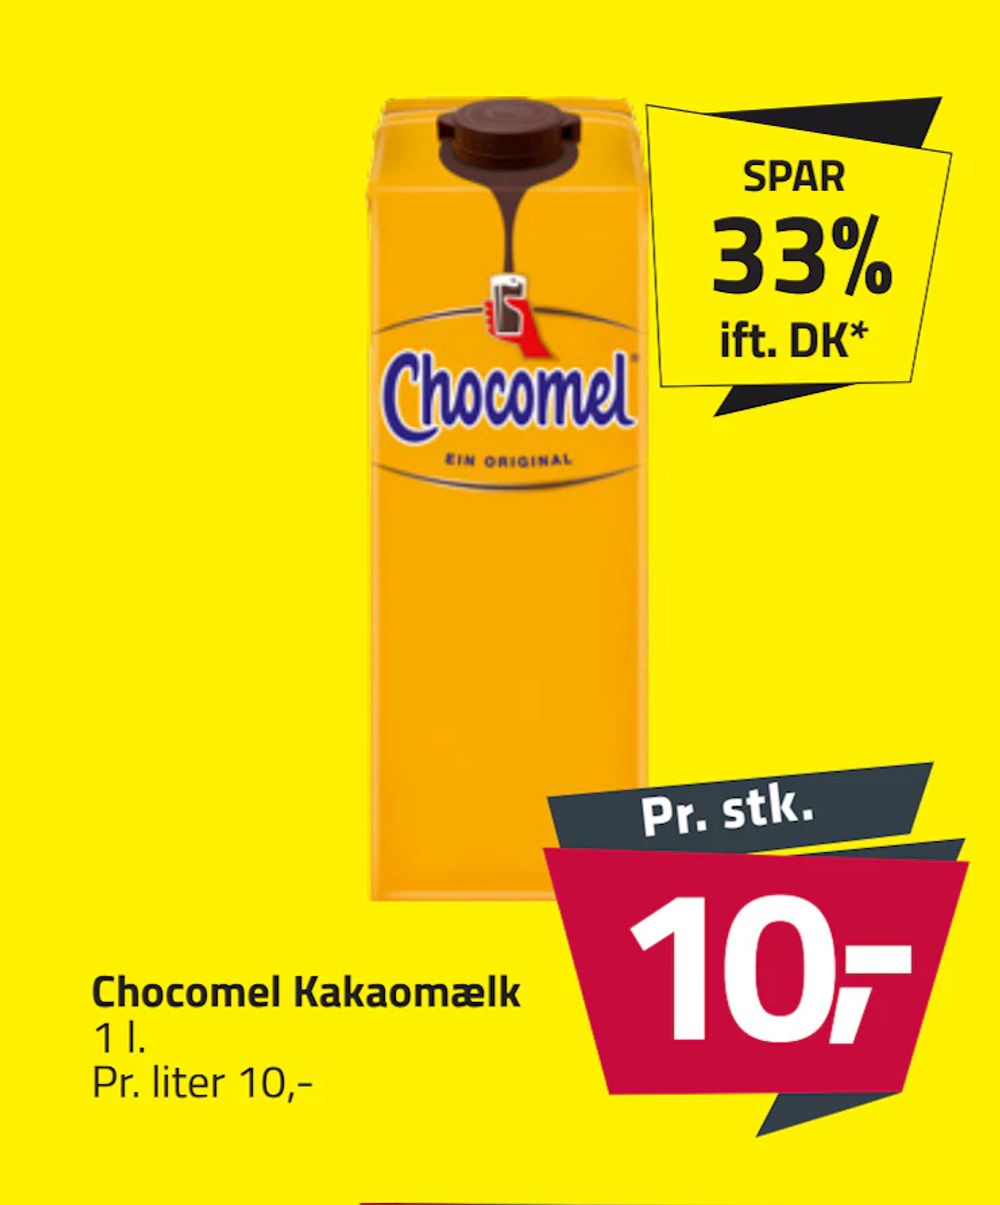 Tilbud på Chocomel Kakaomælk fra Fleggaard til 10 kr.